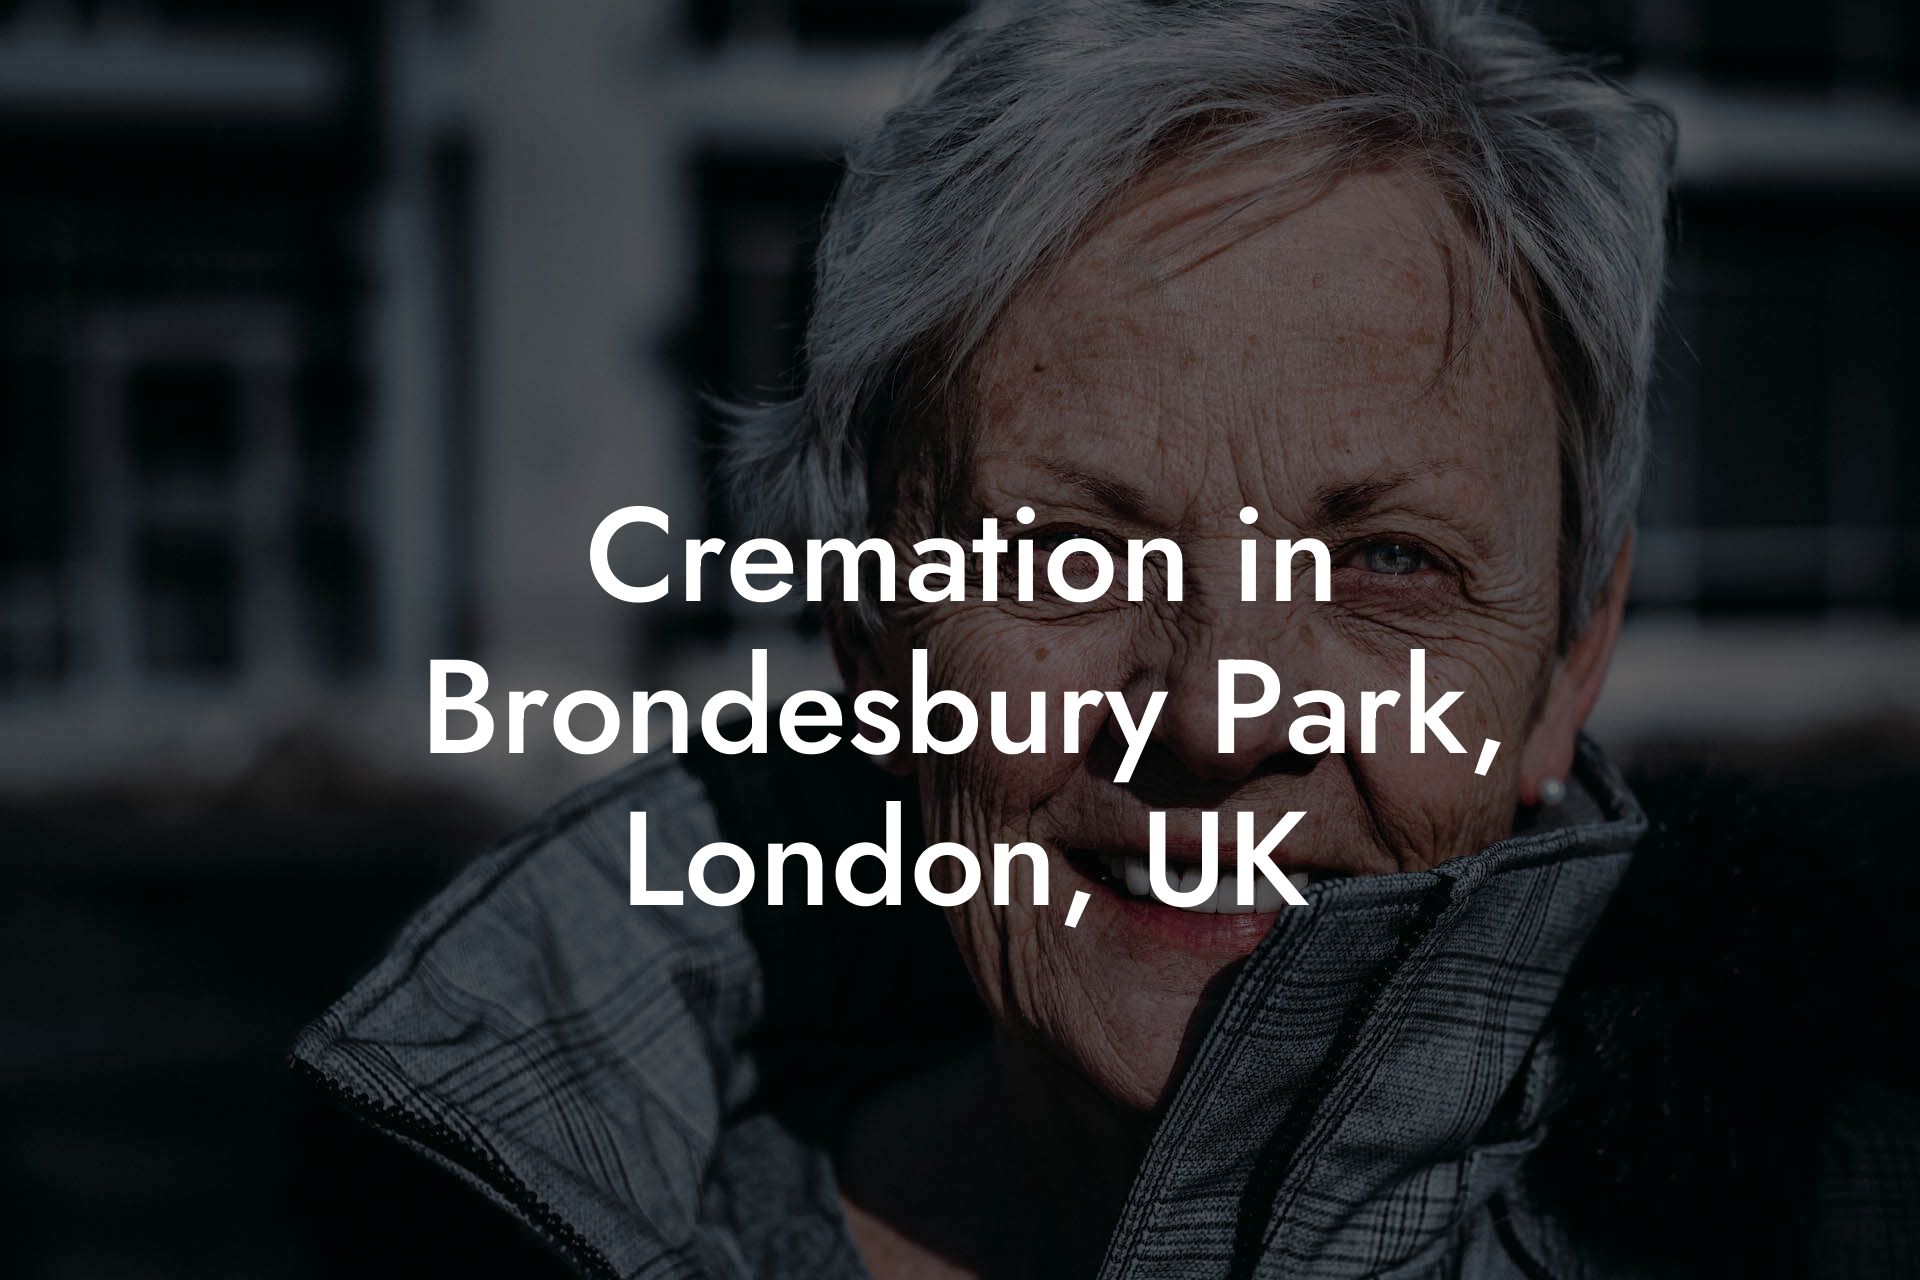 Cremation in Brondesbury Park, London, UK